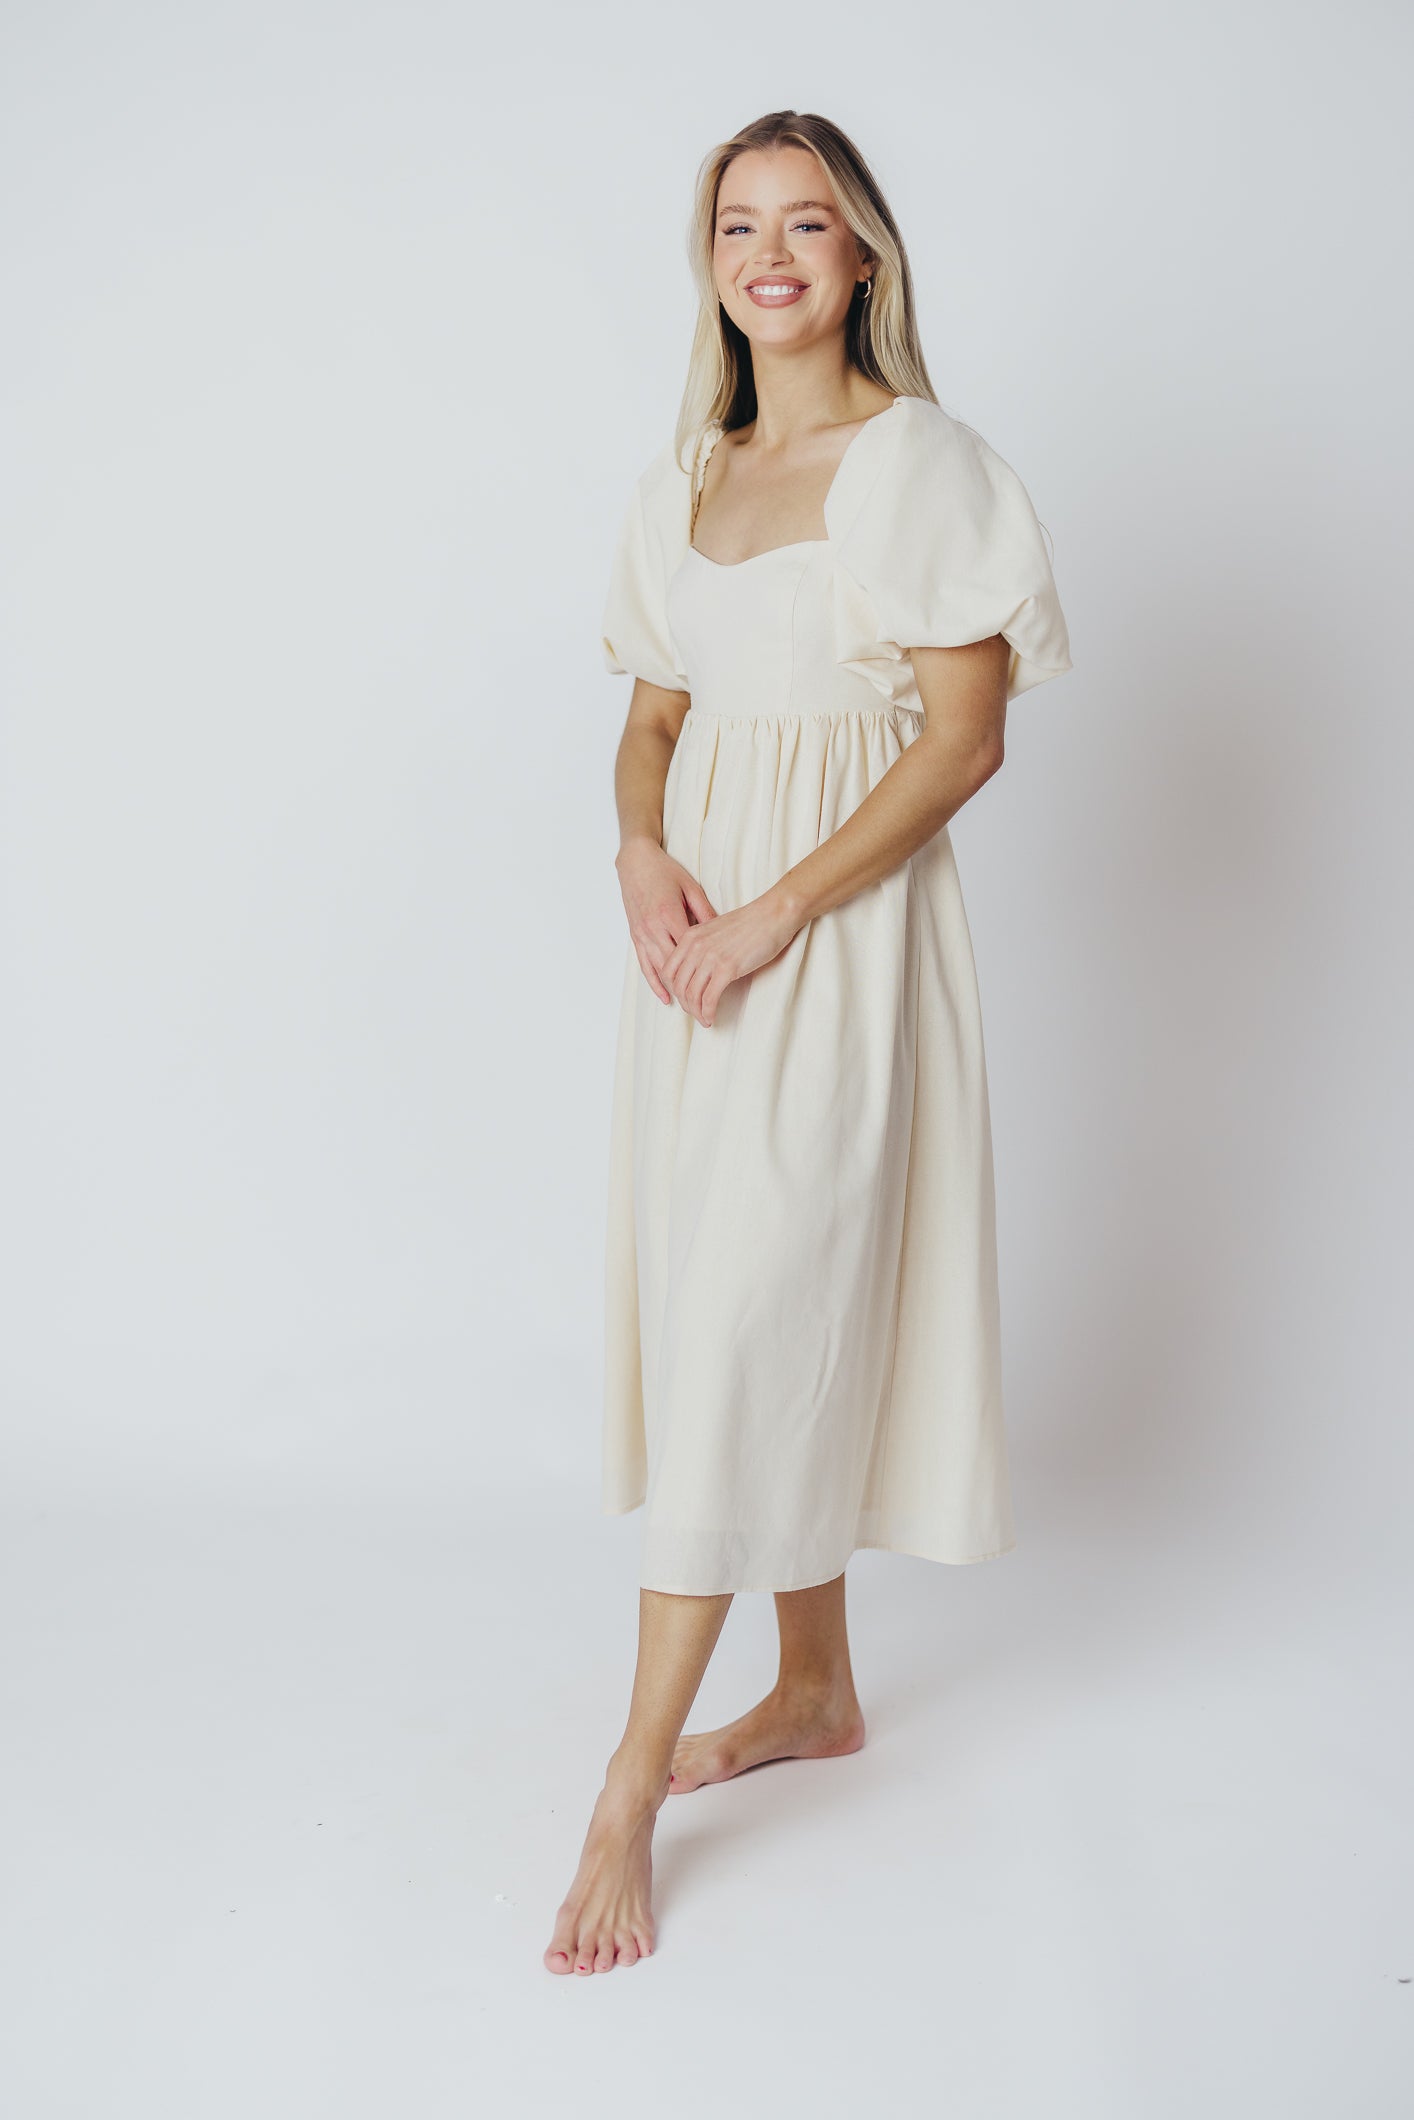 Hamilton Midi Dress in Ivory - Bump Friendly (S-XL)